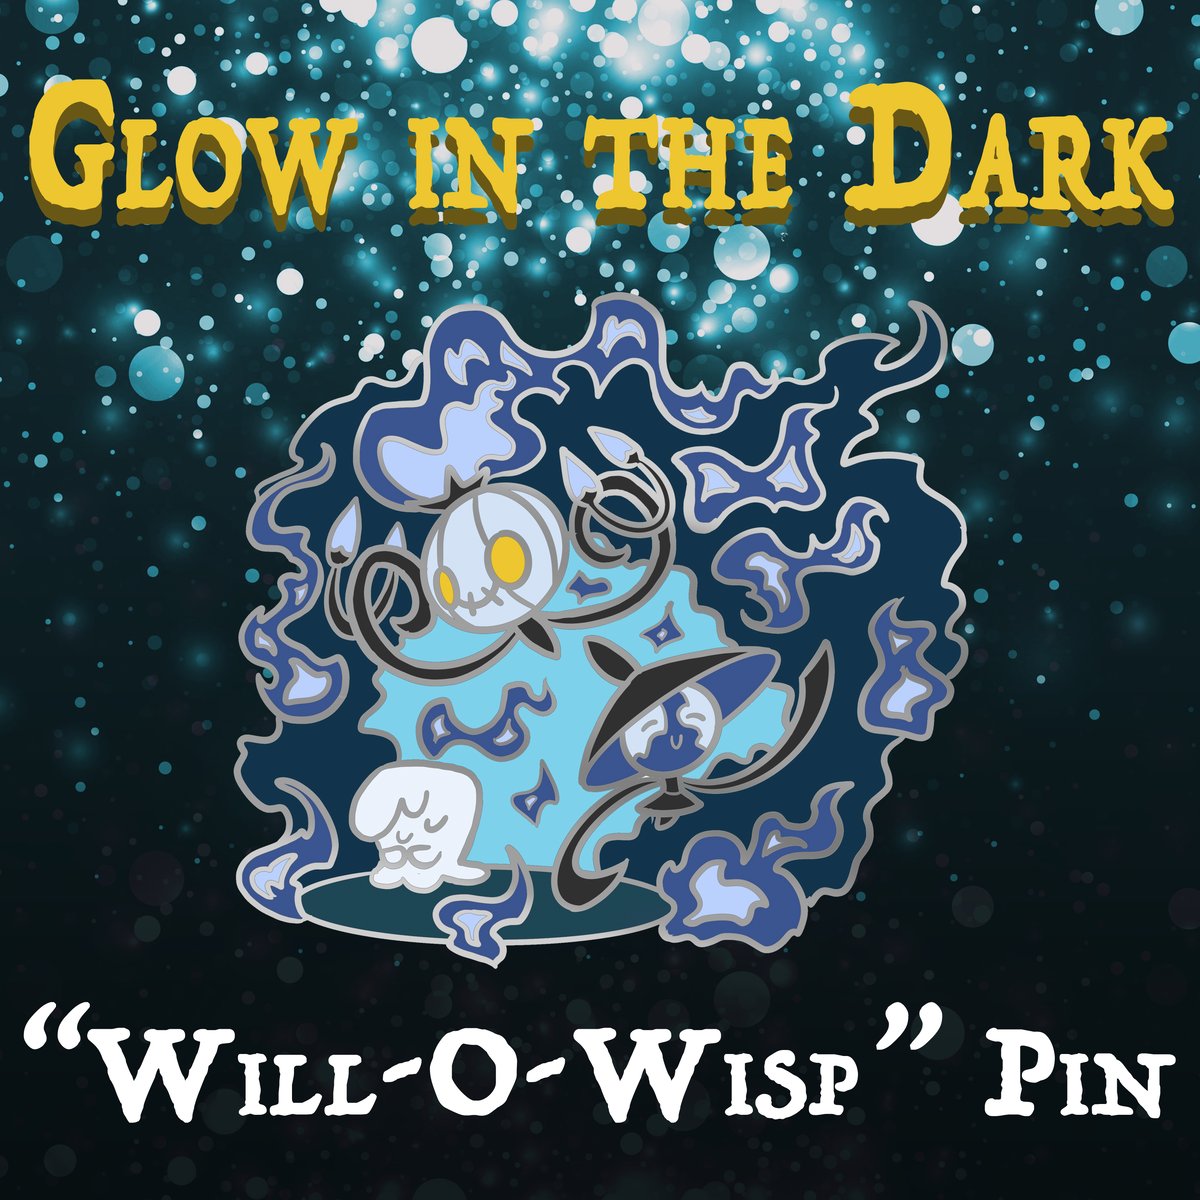 Image of "Will-O-Wisps" Pin